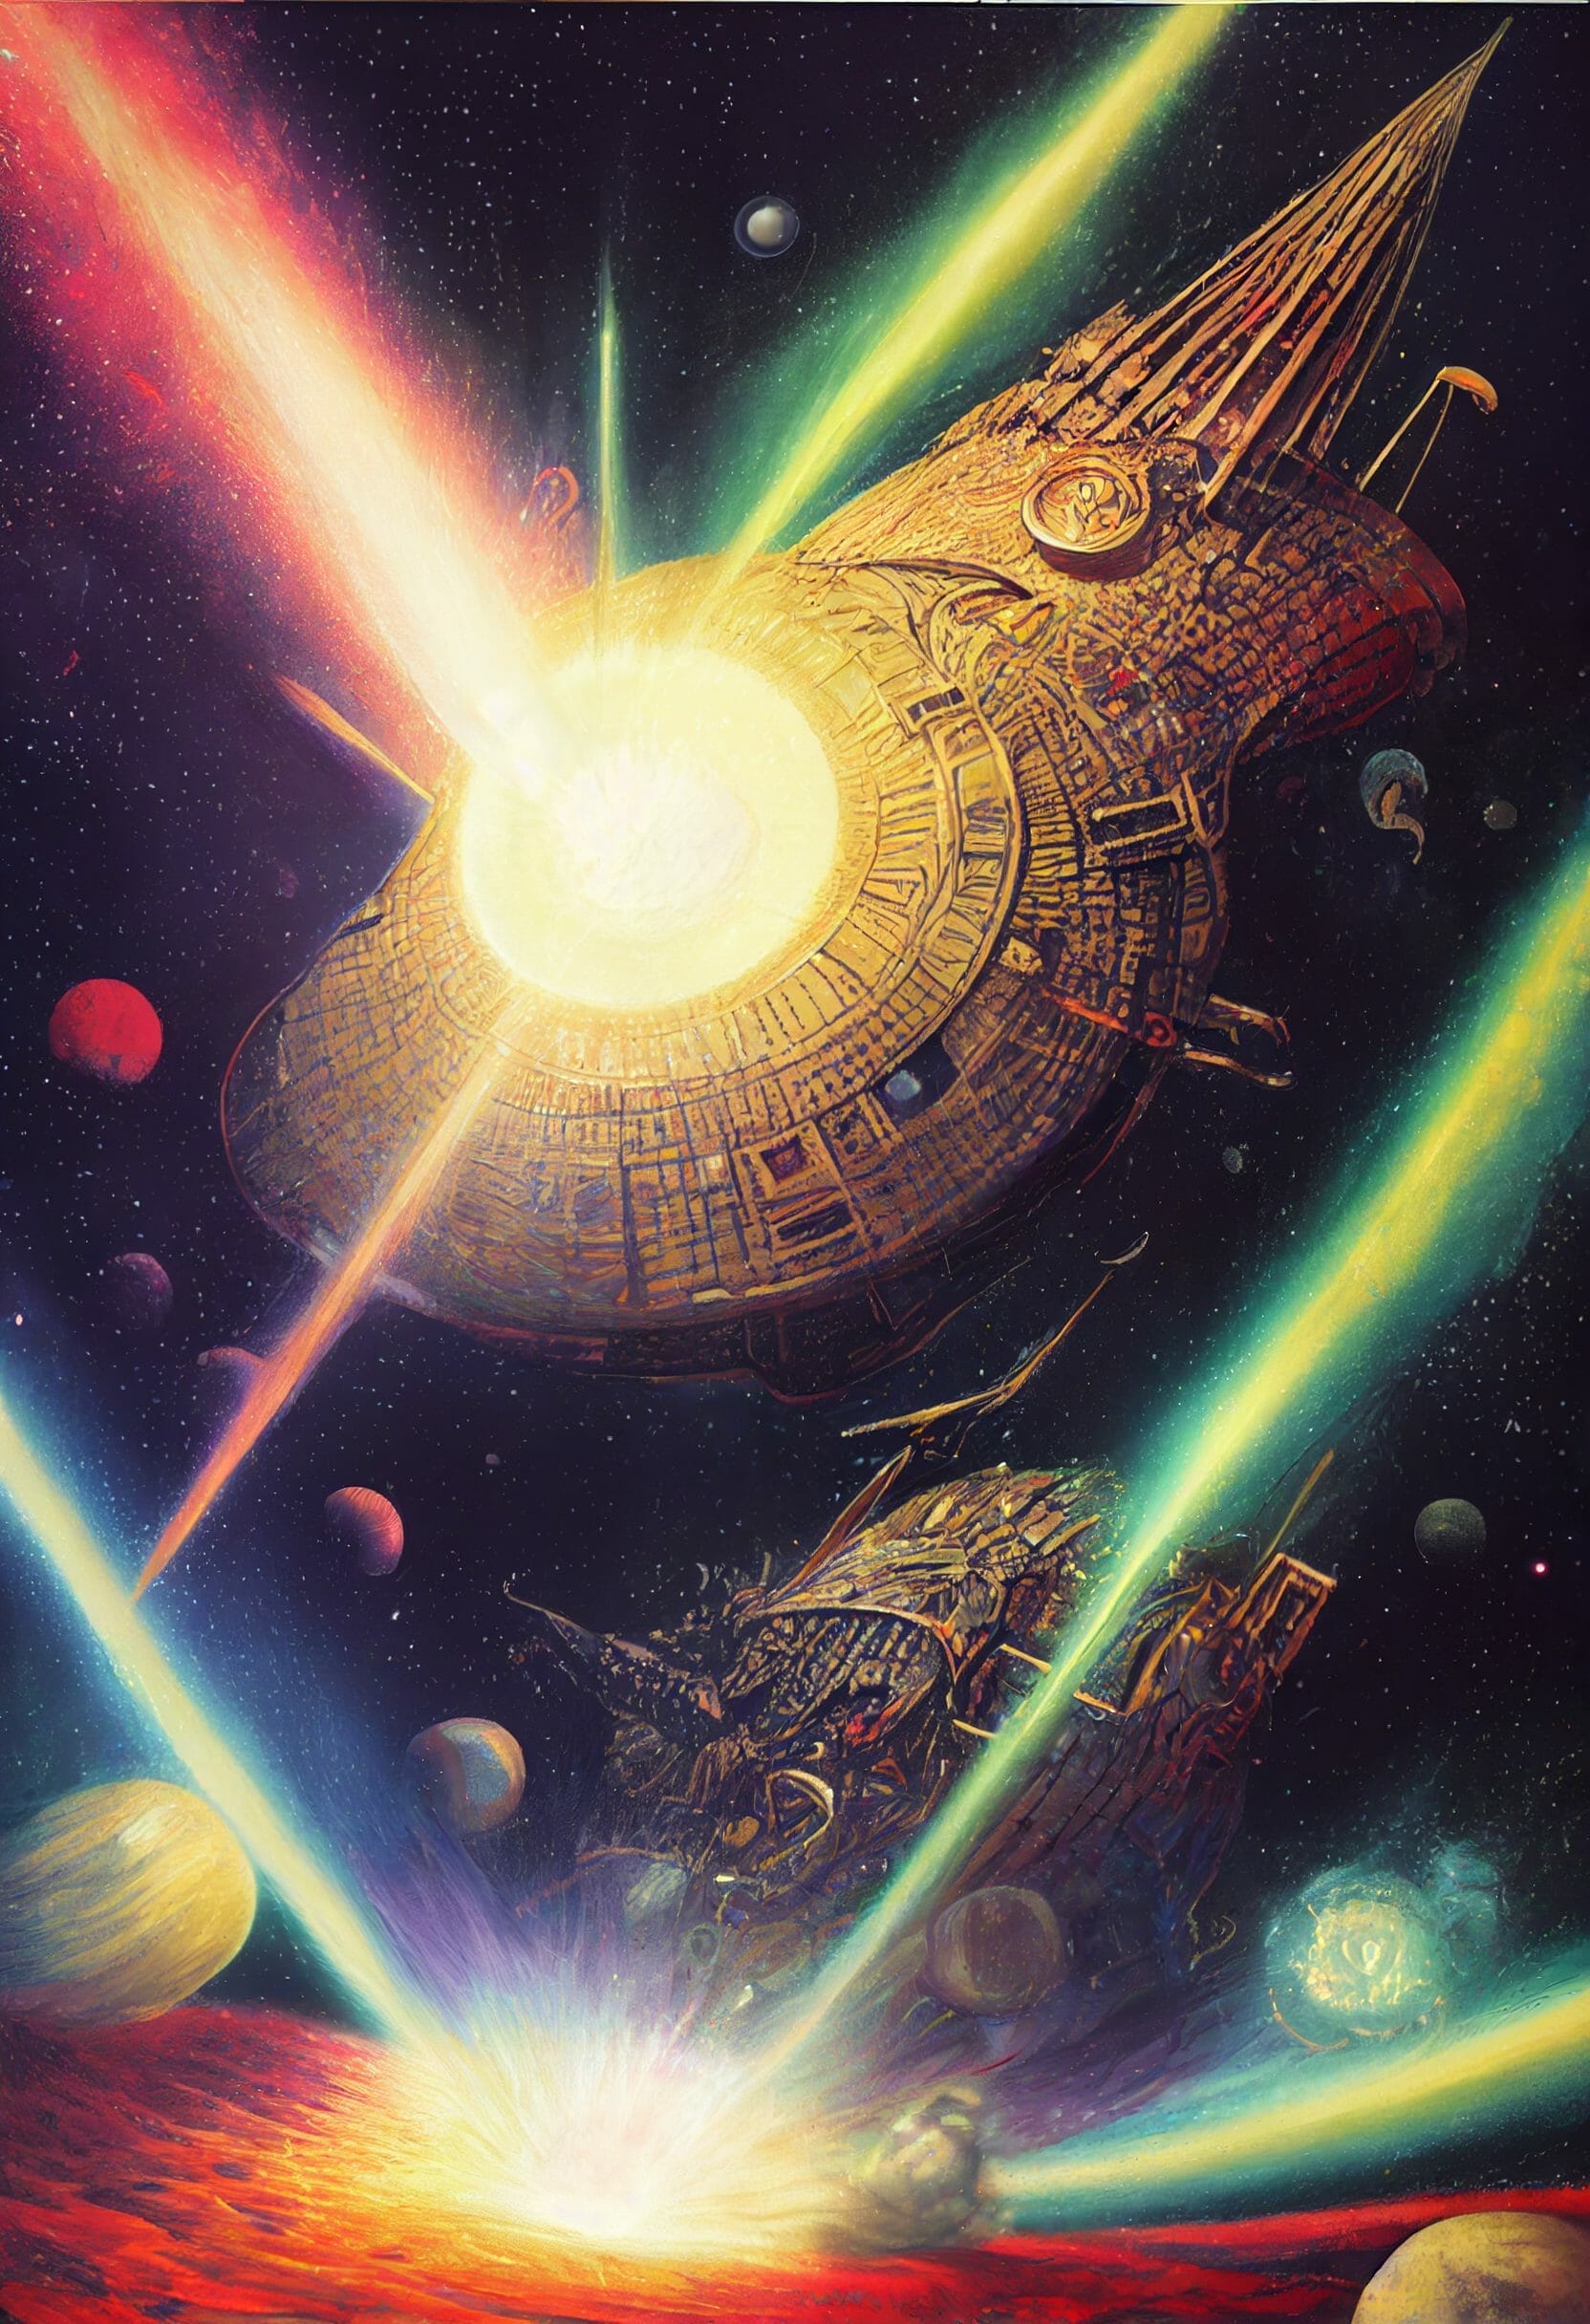 1970s-style sci-fi battle